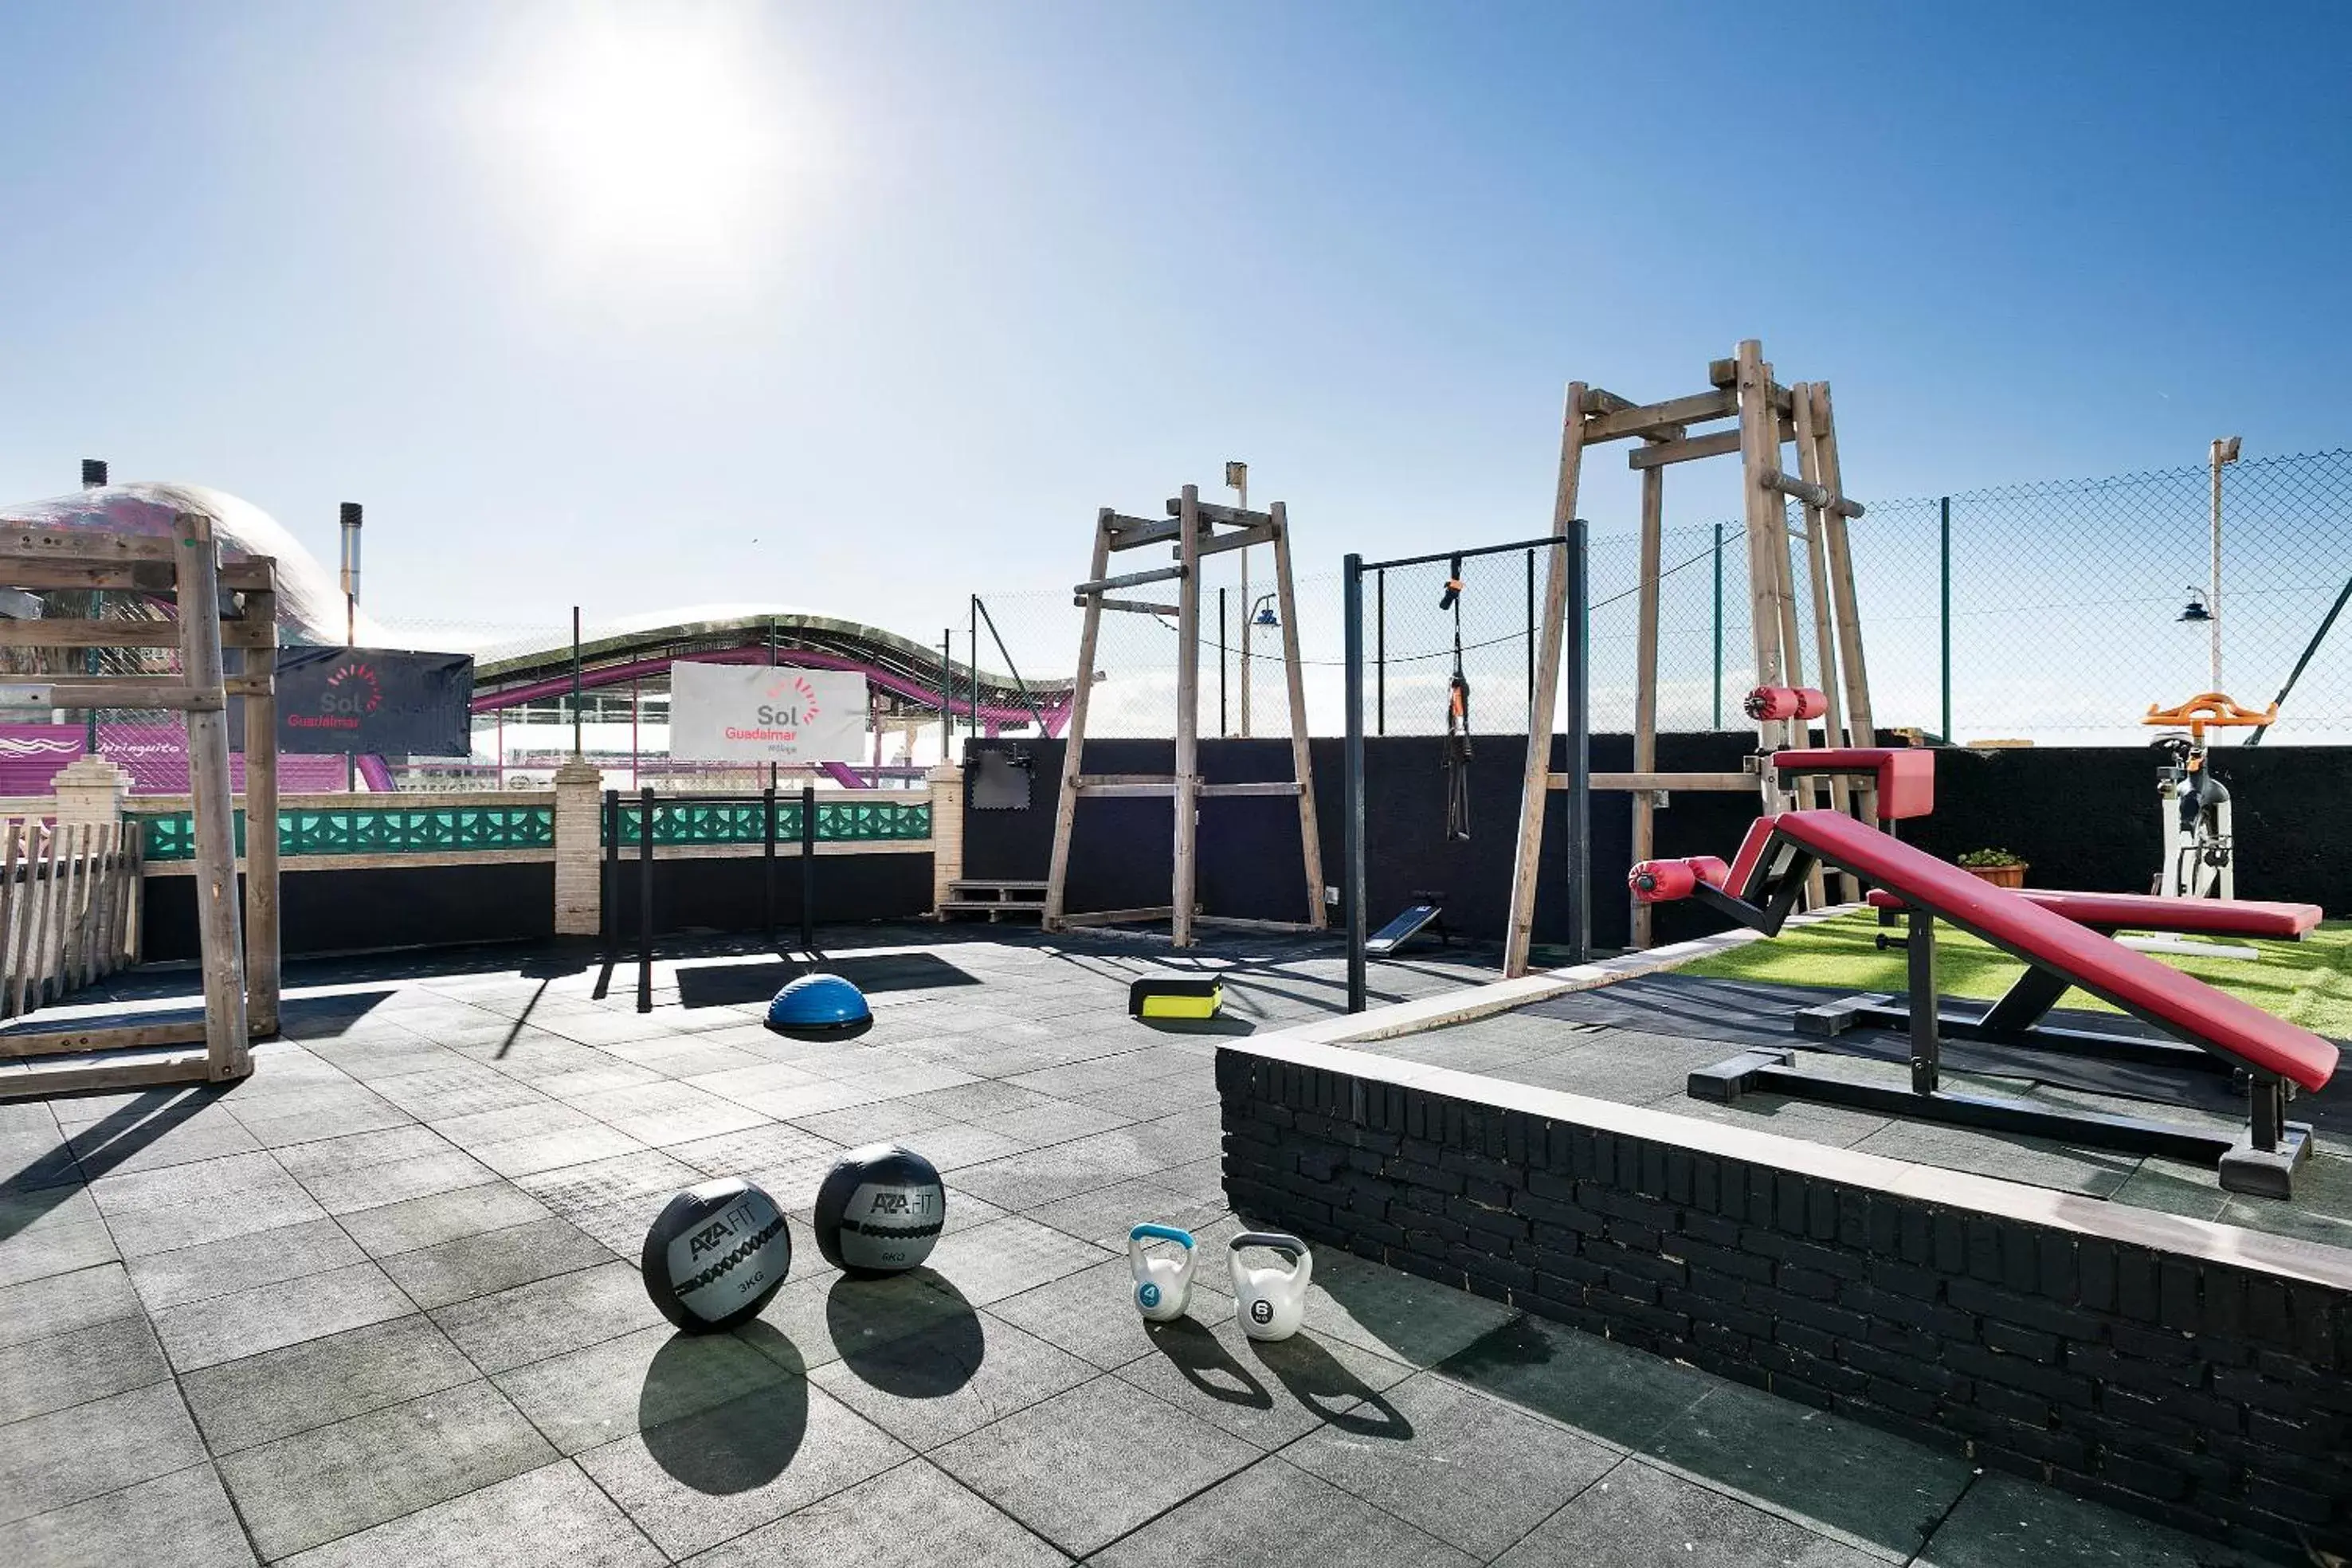 Off site, Children's Play Area in Sol Guadalmar